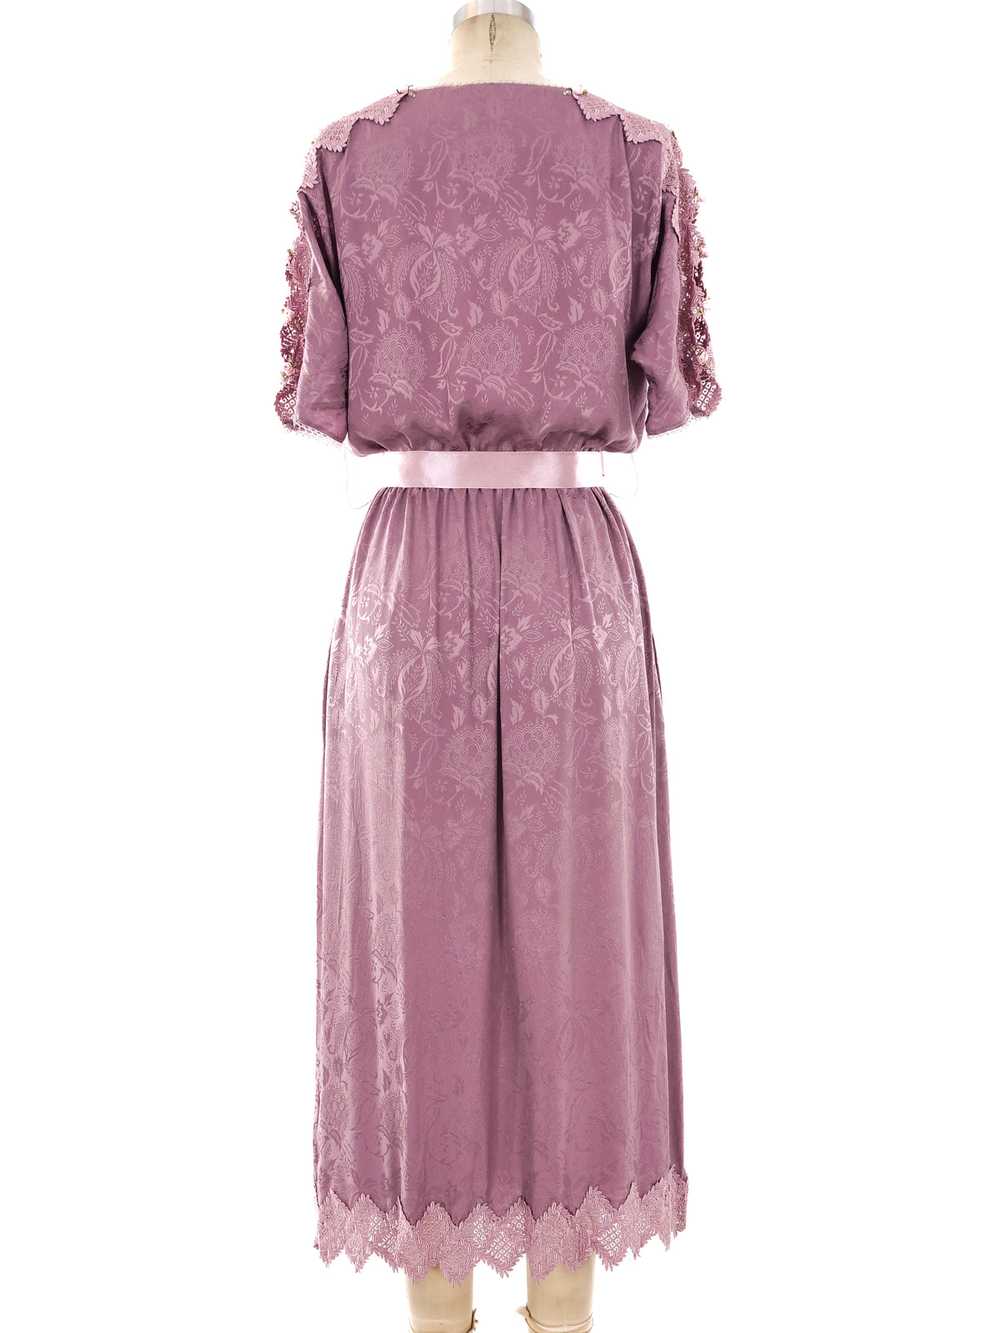 Lace Trimmed Jacquard Silk Dress - image 4